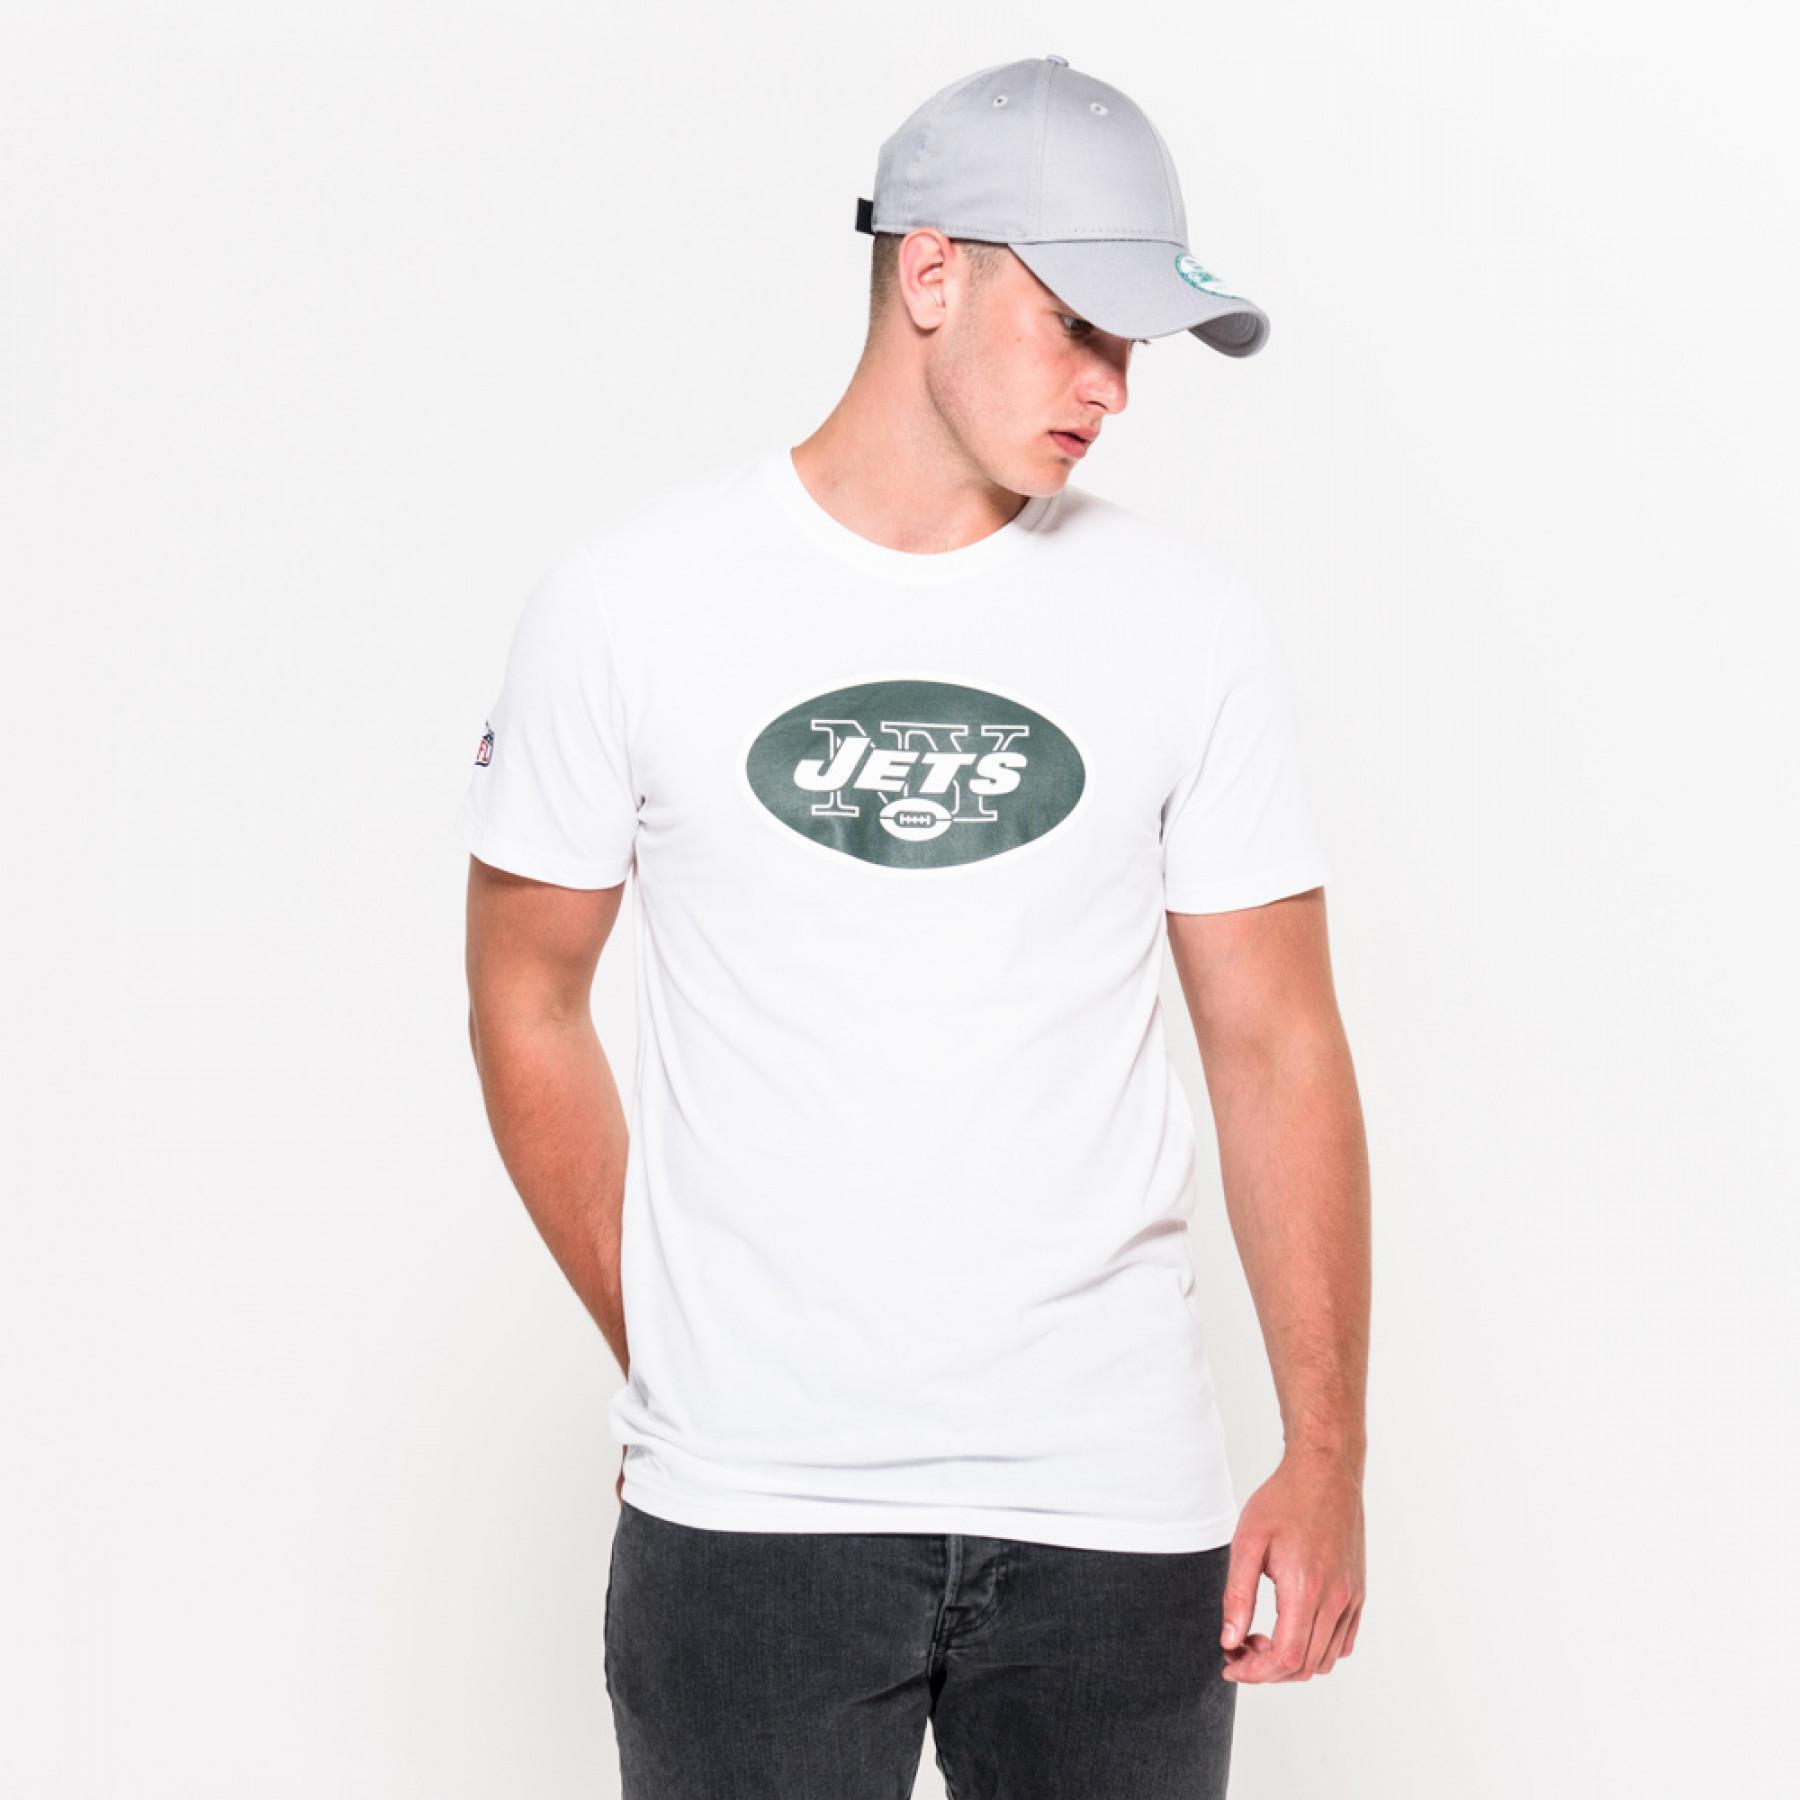  New EraT - s h i r t   logo New York Jets